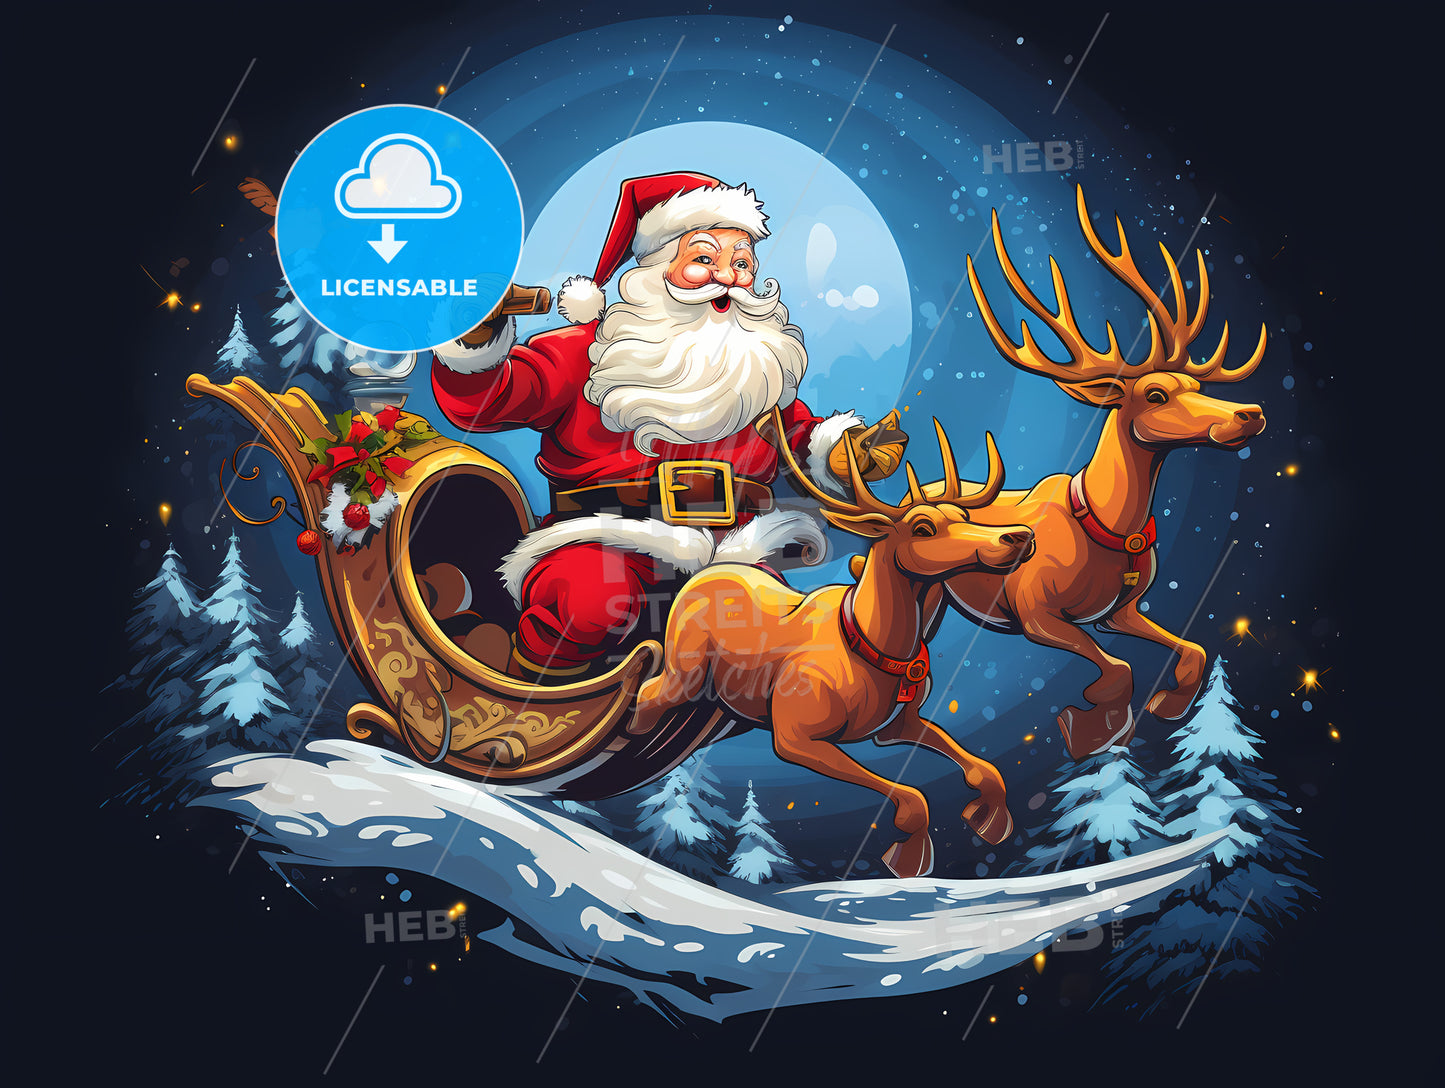 Cartoon Of Santa Claus Riding A Sleigh With Reindeer